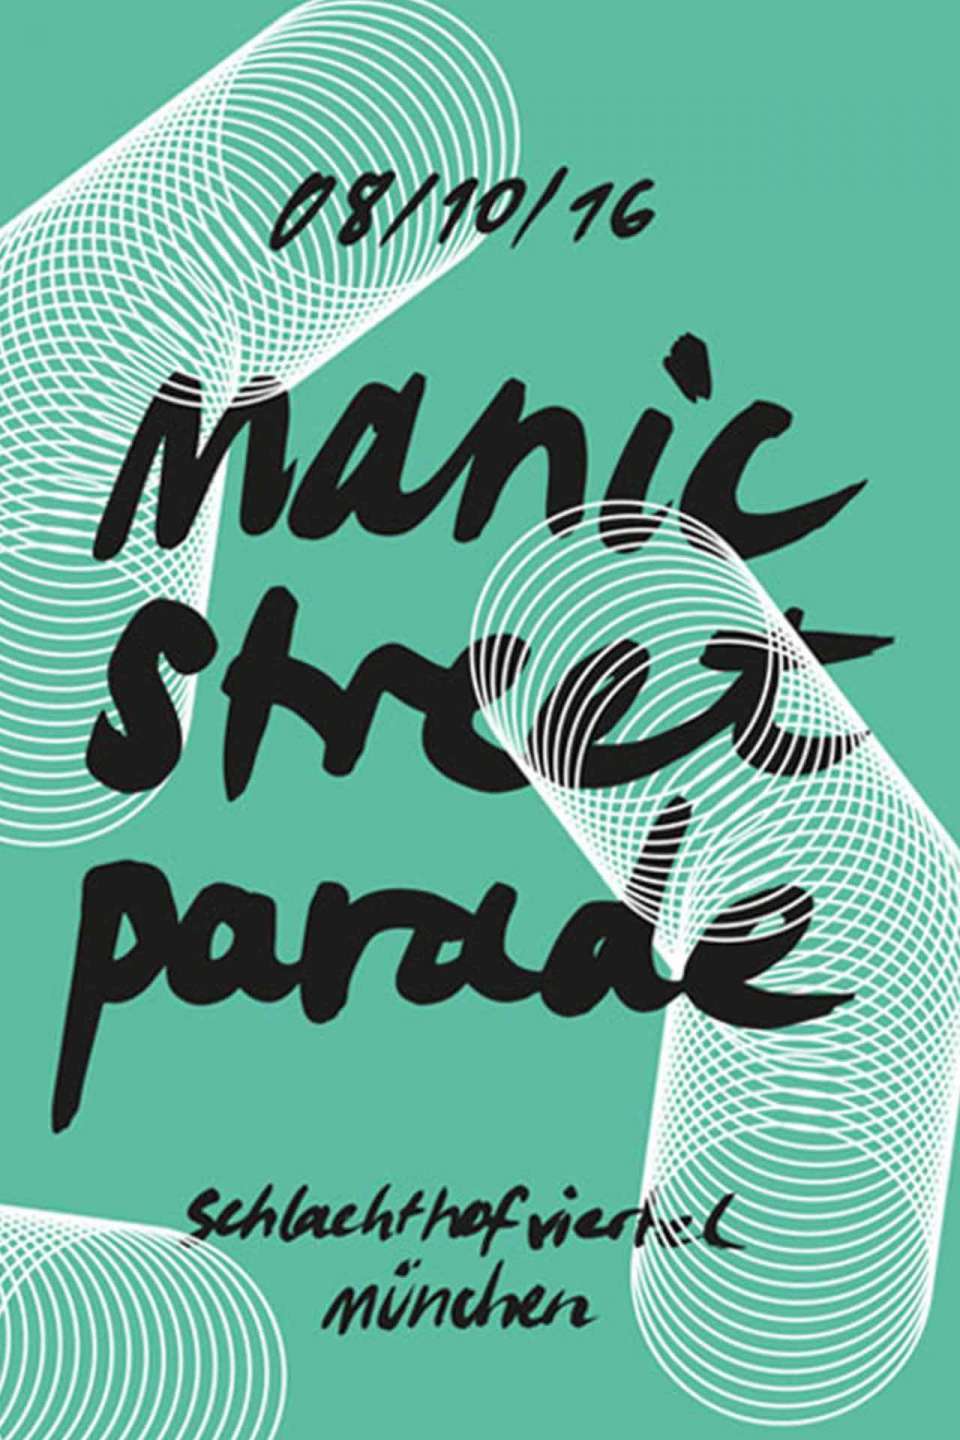 manic street parade - Logo - 2016